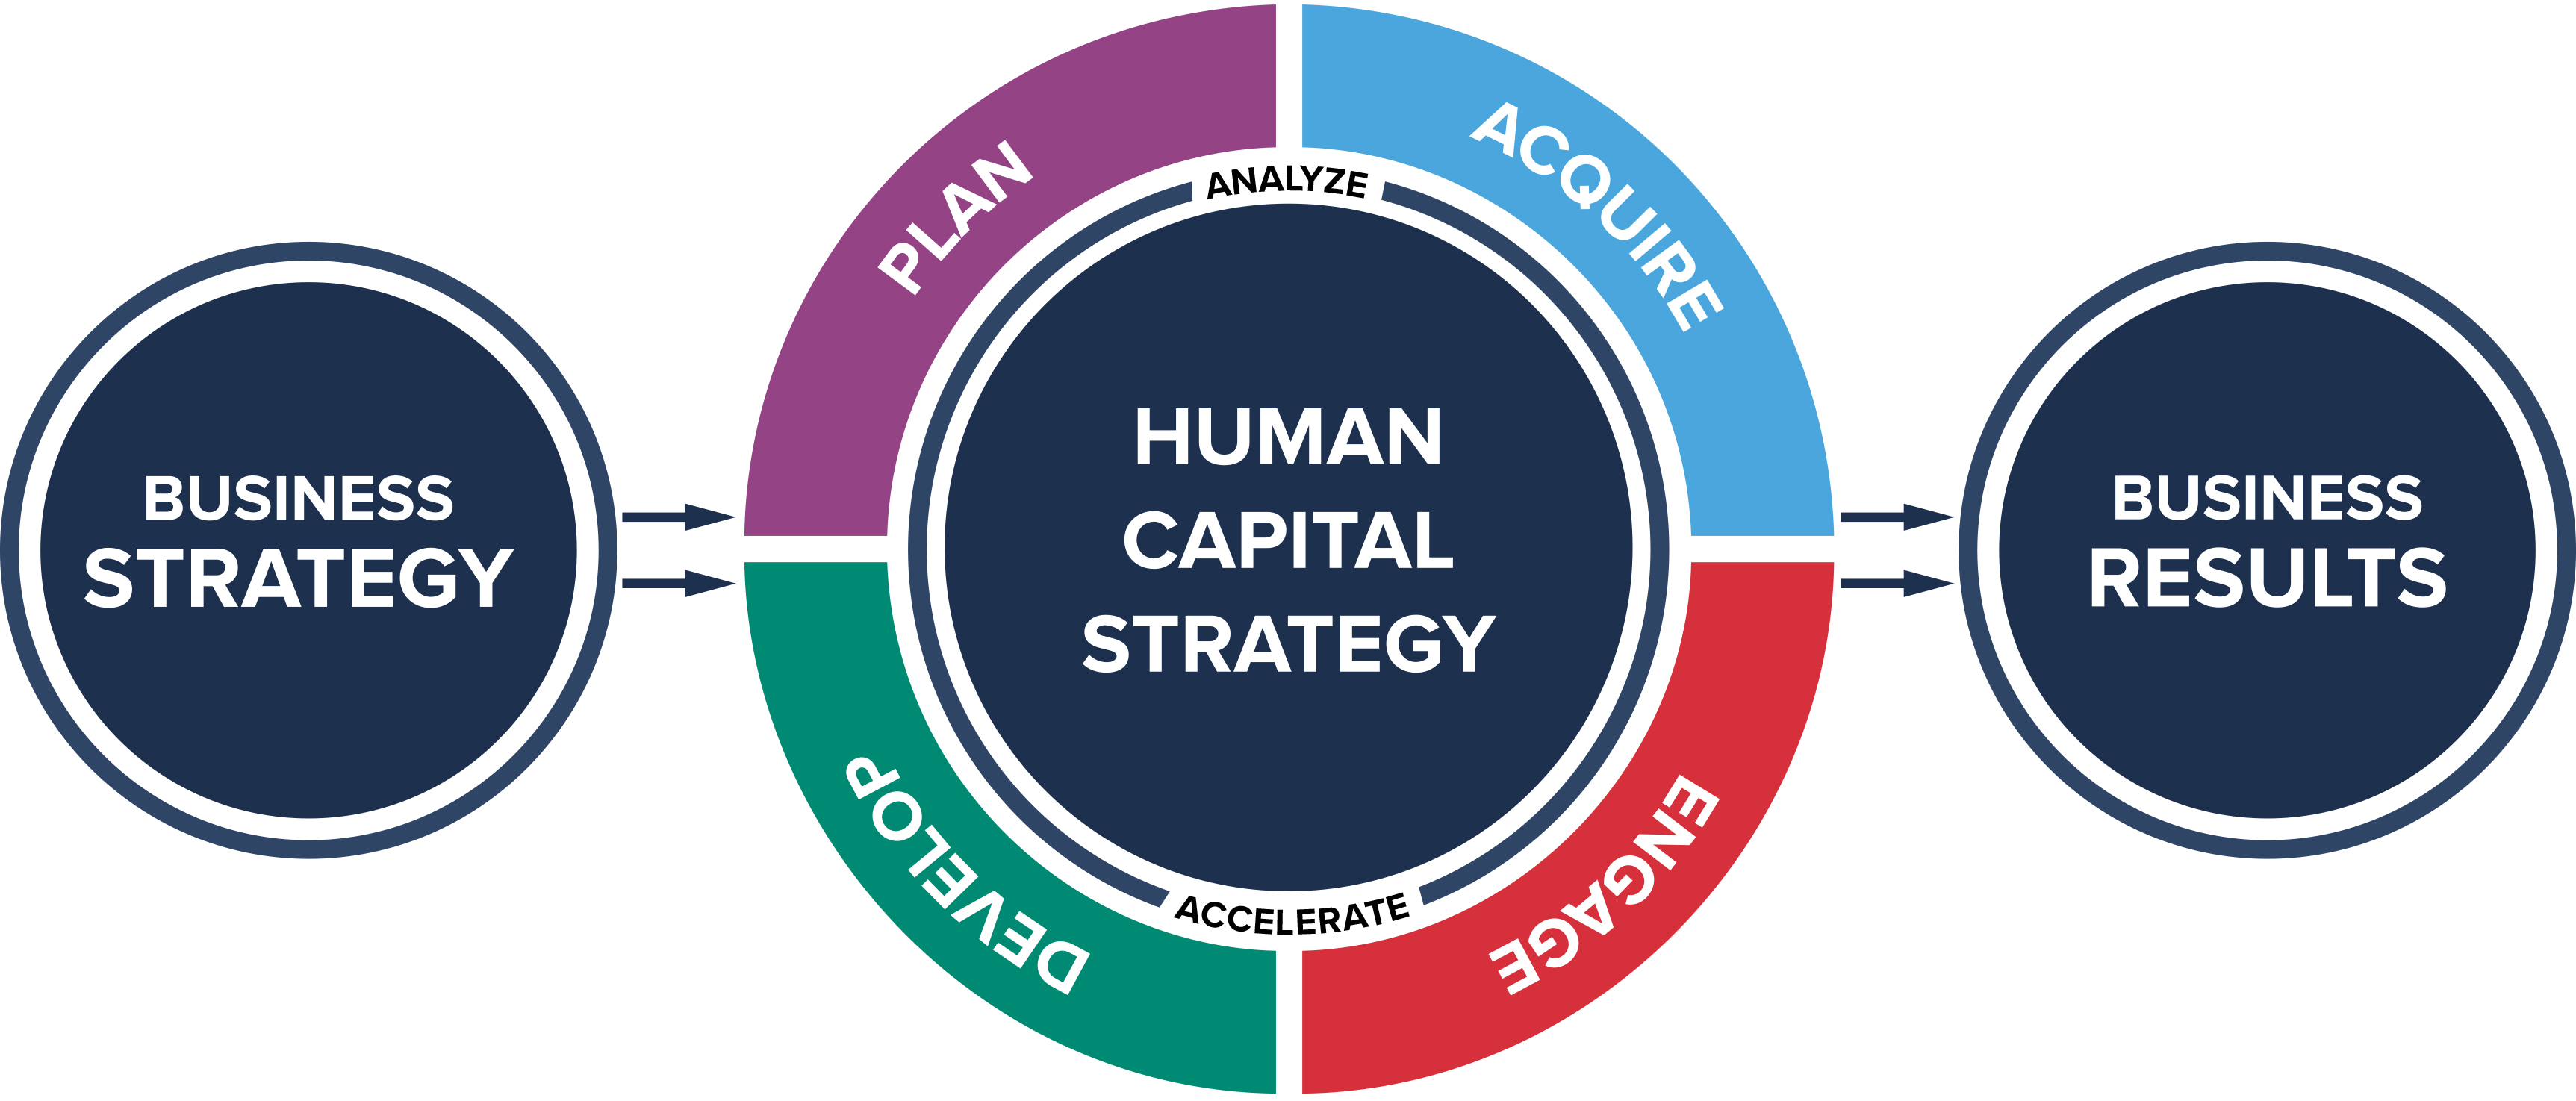 HCI Model for Human Capital Management